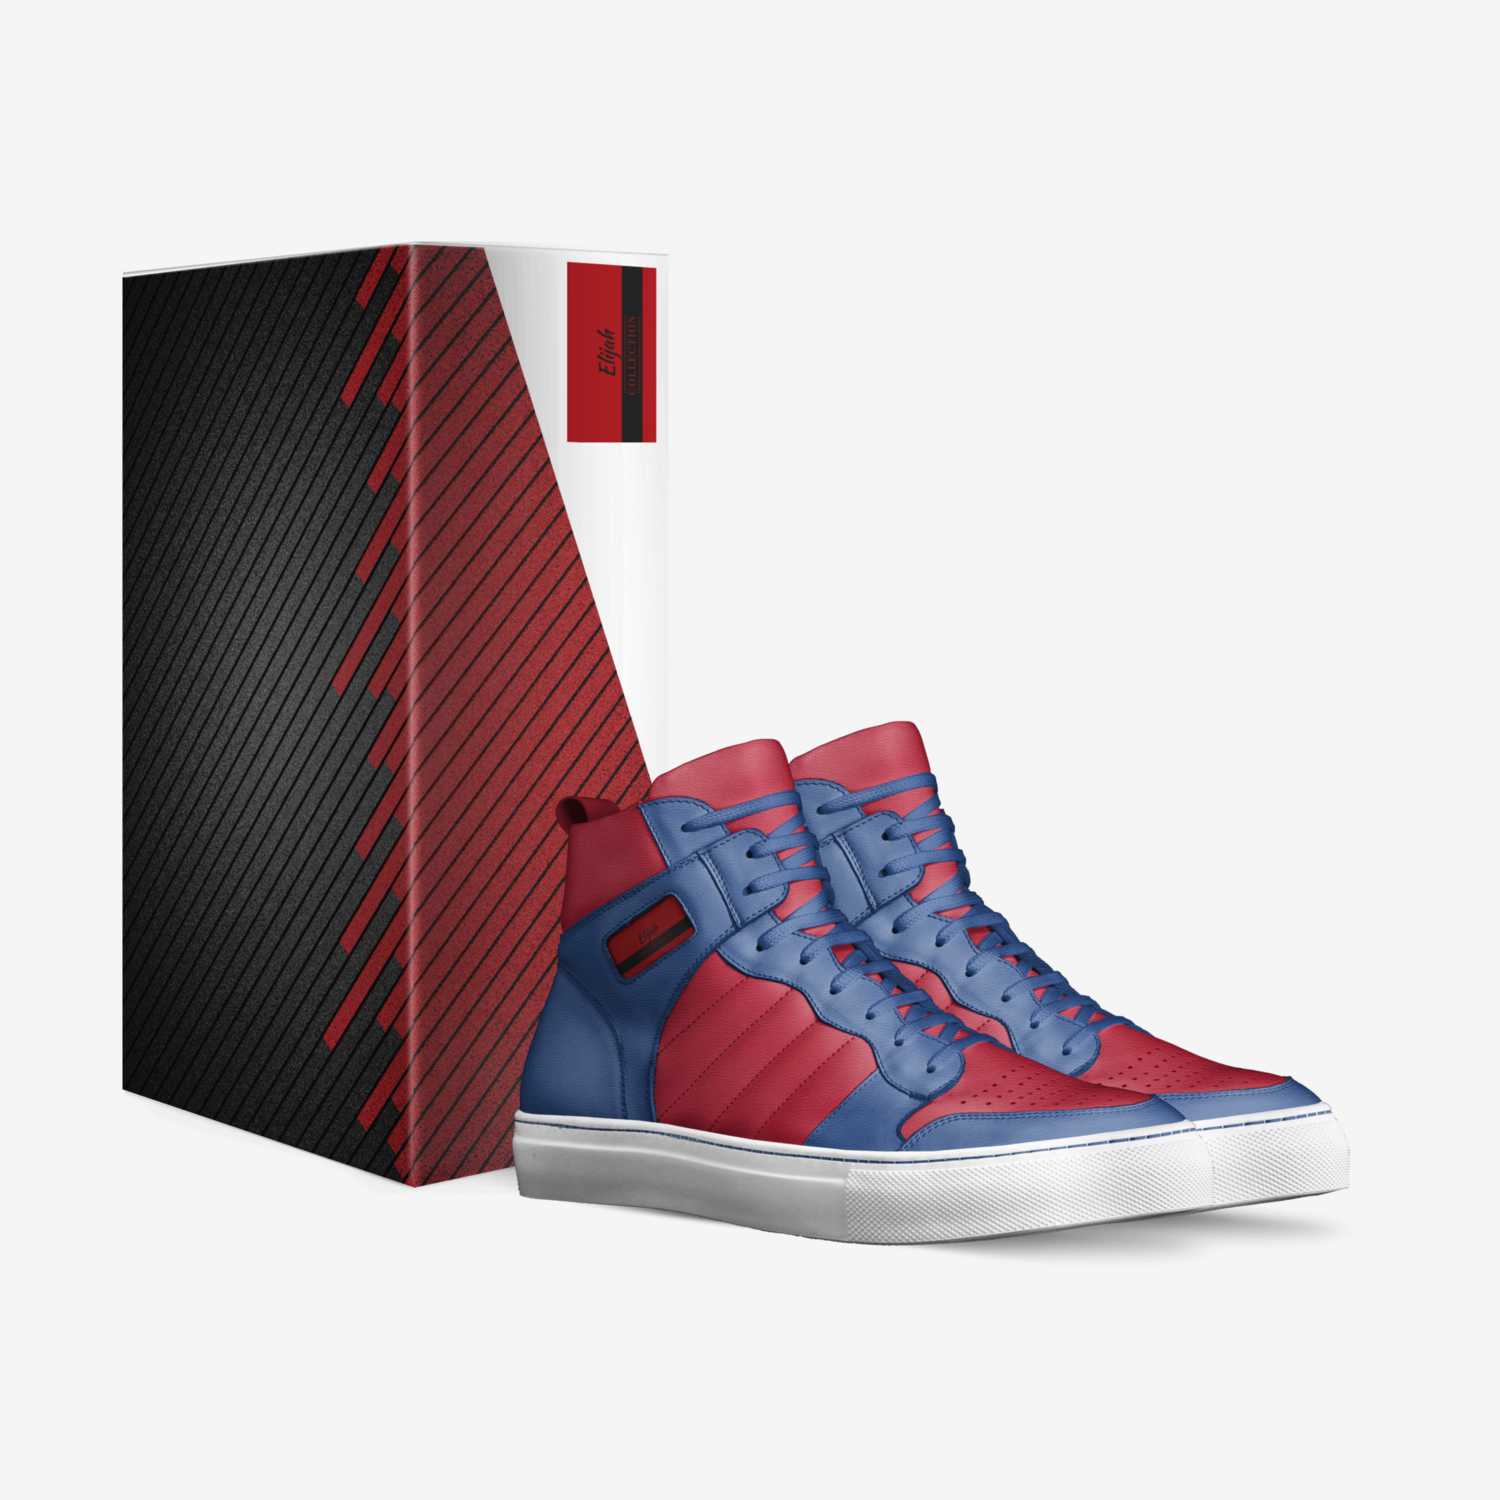 Elijah custom made in Italy shoes by Elijah Ramirez | Box view